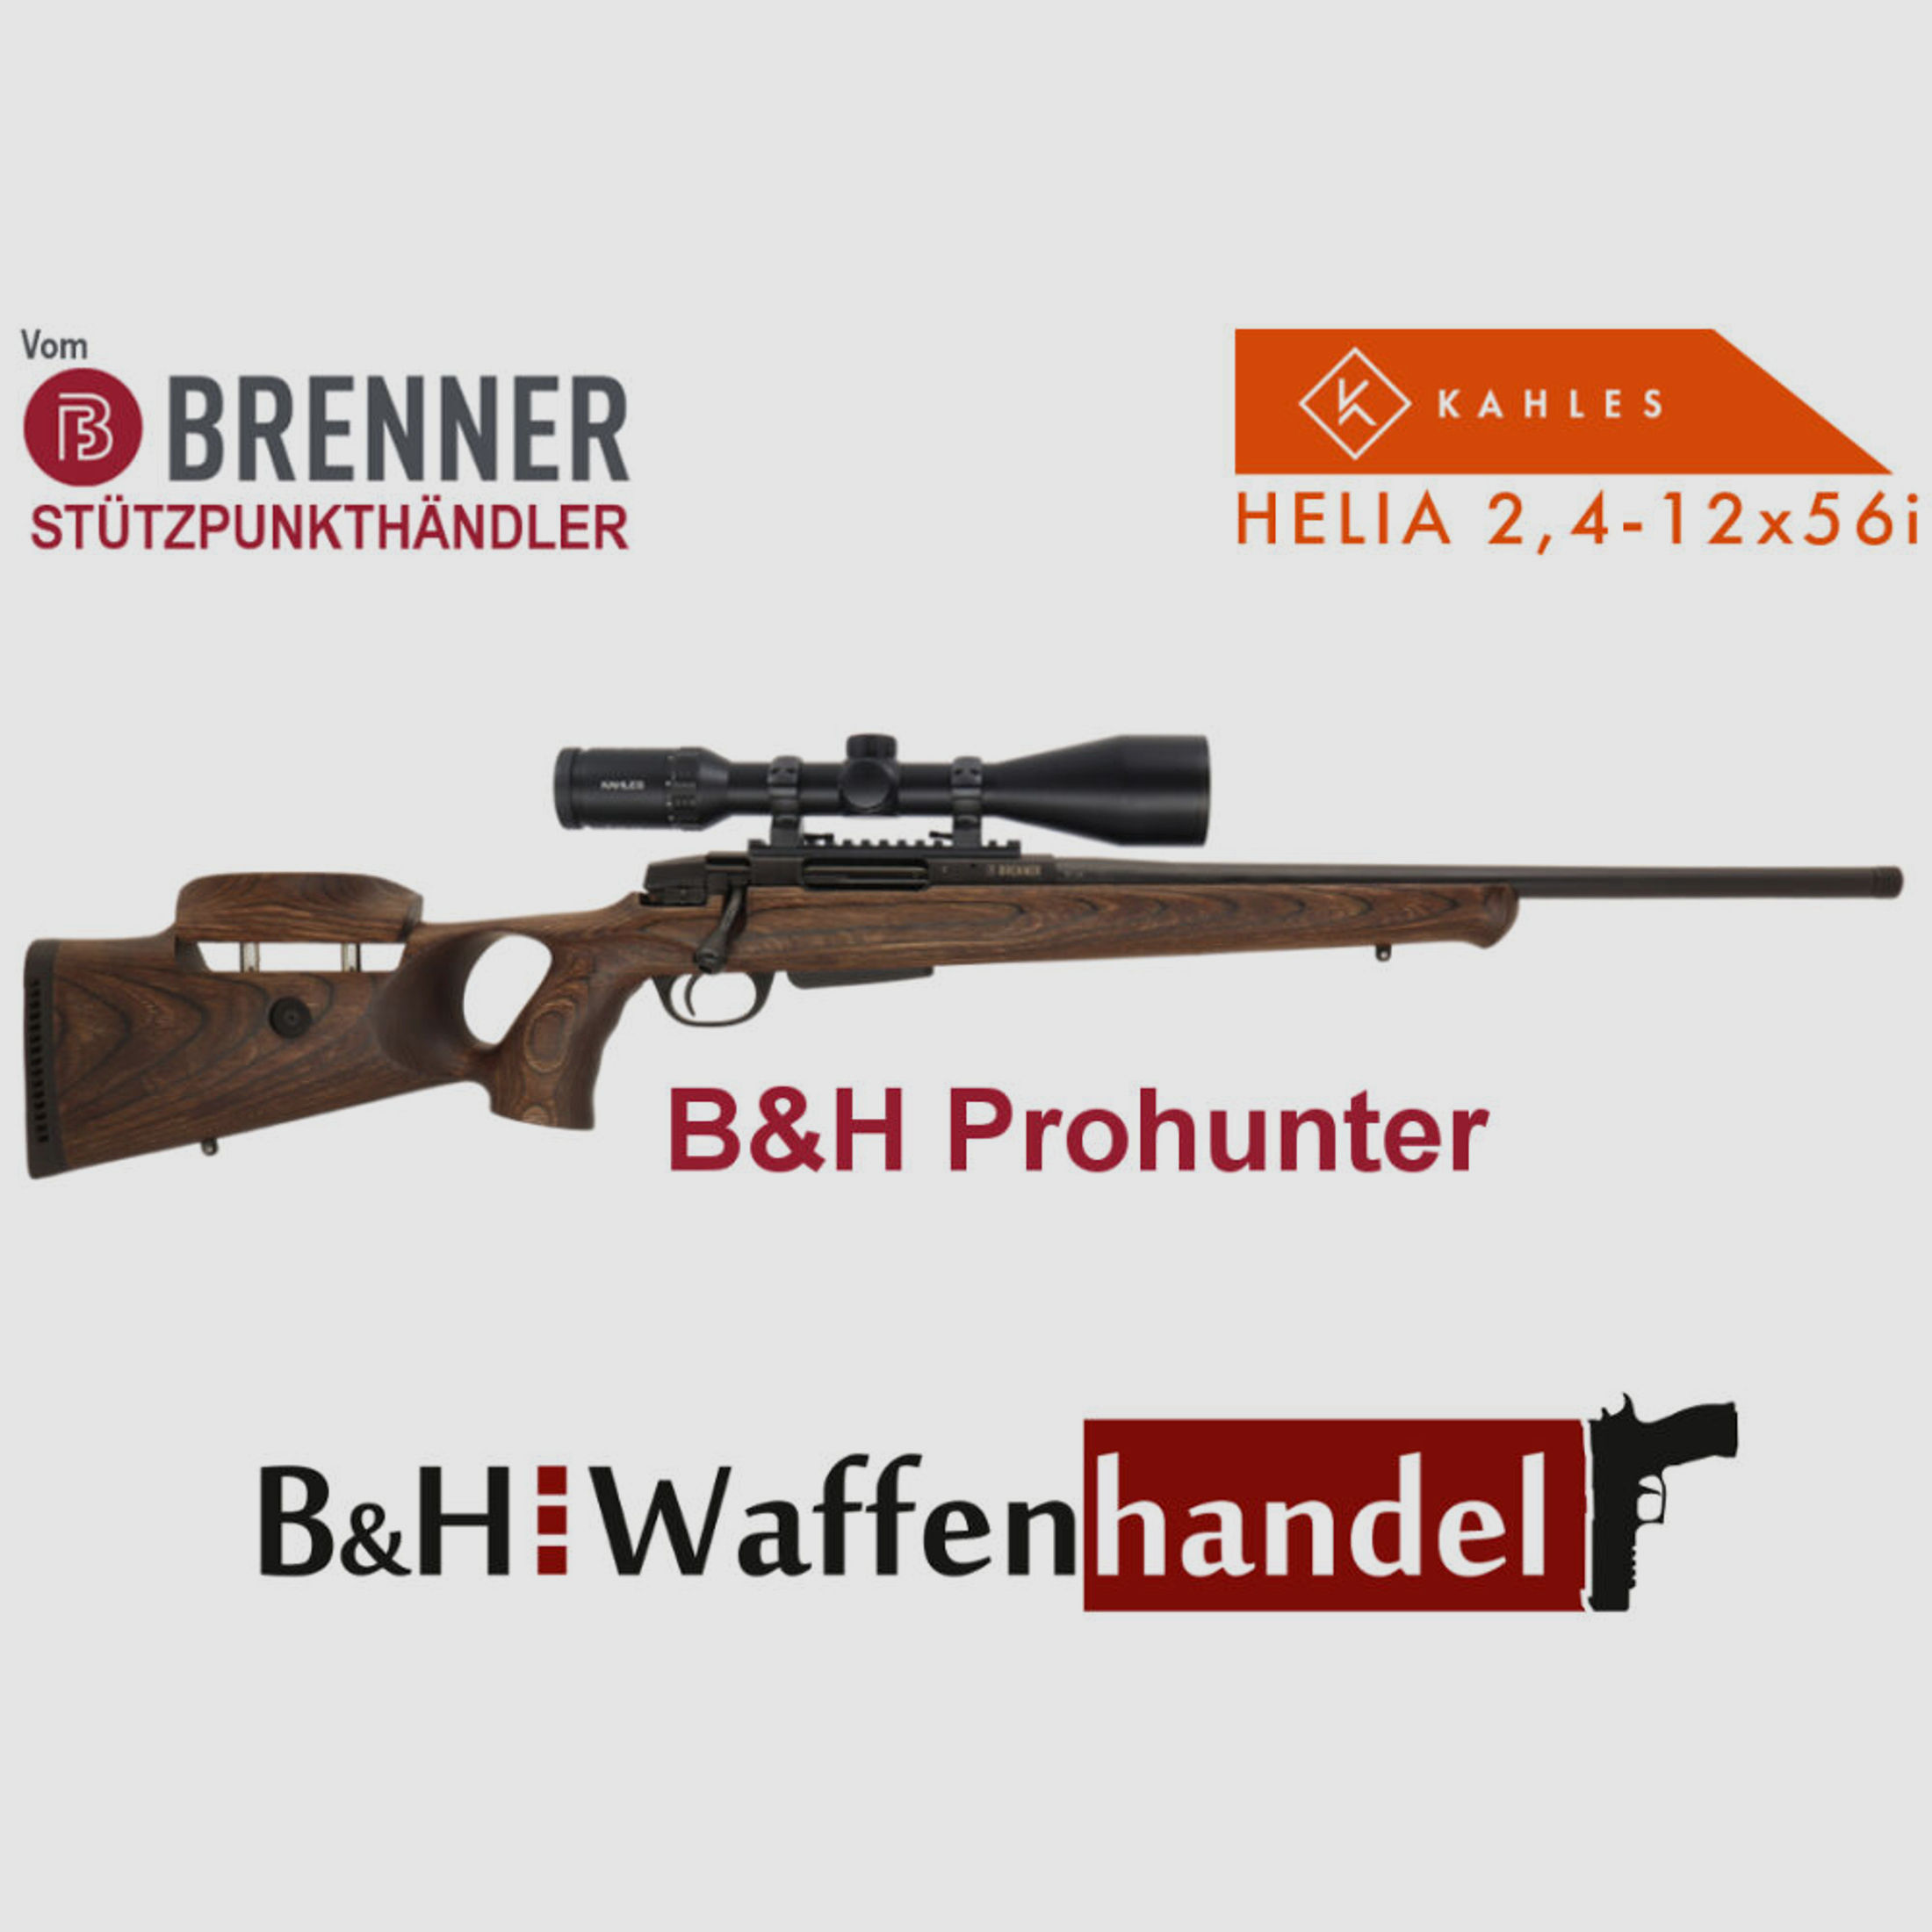 Brenner Komplettpaket:	 BR-20 B&H Prohunter Lochschaft mit Verstellung inkl. Kahles Helia 2.4-12x56 fertig montiert Jagd Repetierbüchse